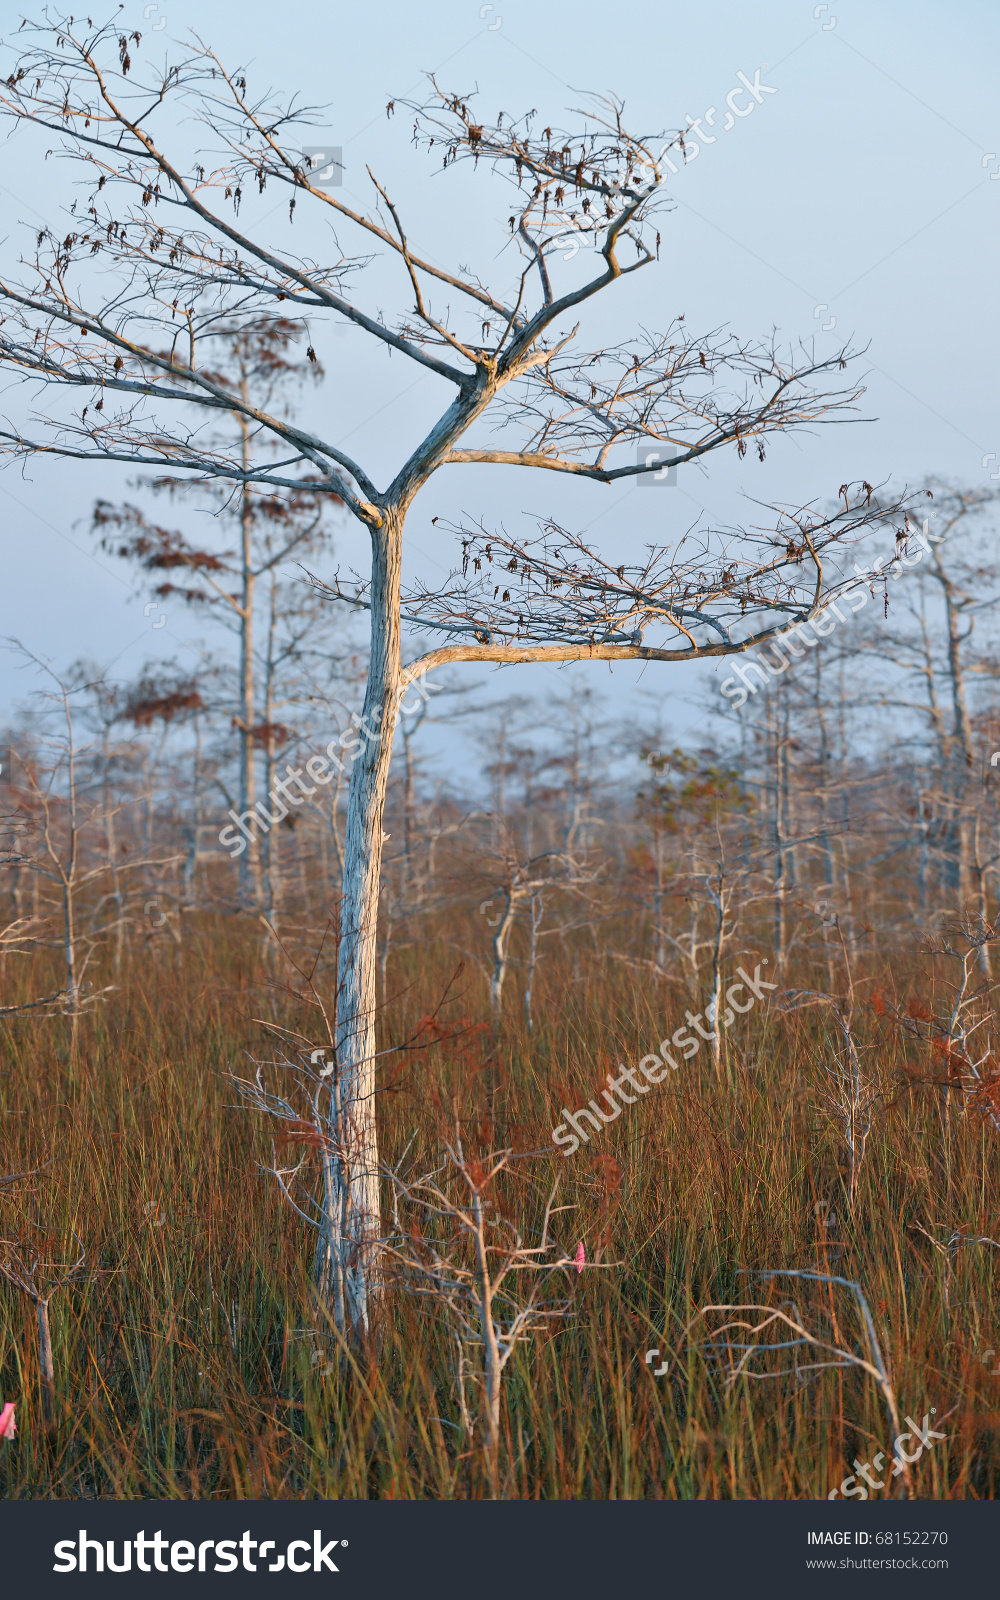 Dwarf Cypress Tree In Winter Dormancy At Florida'S Everglades.